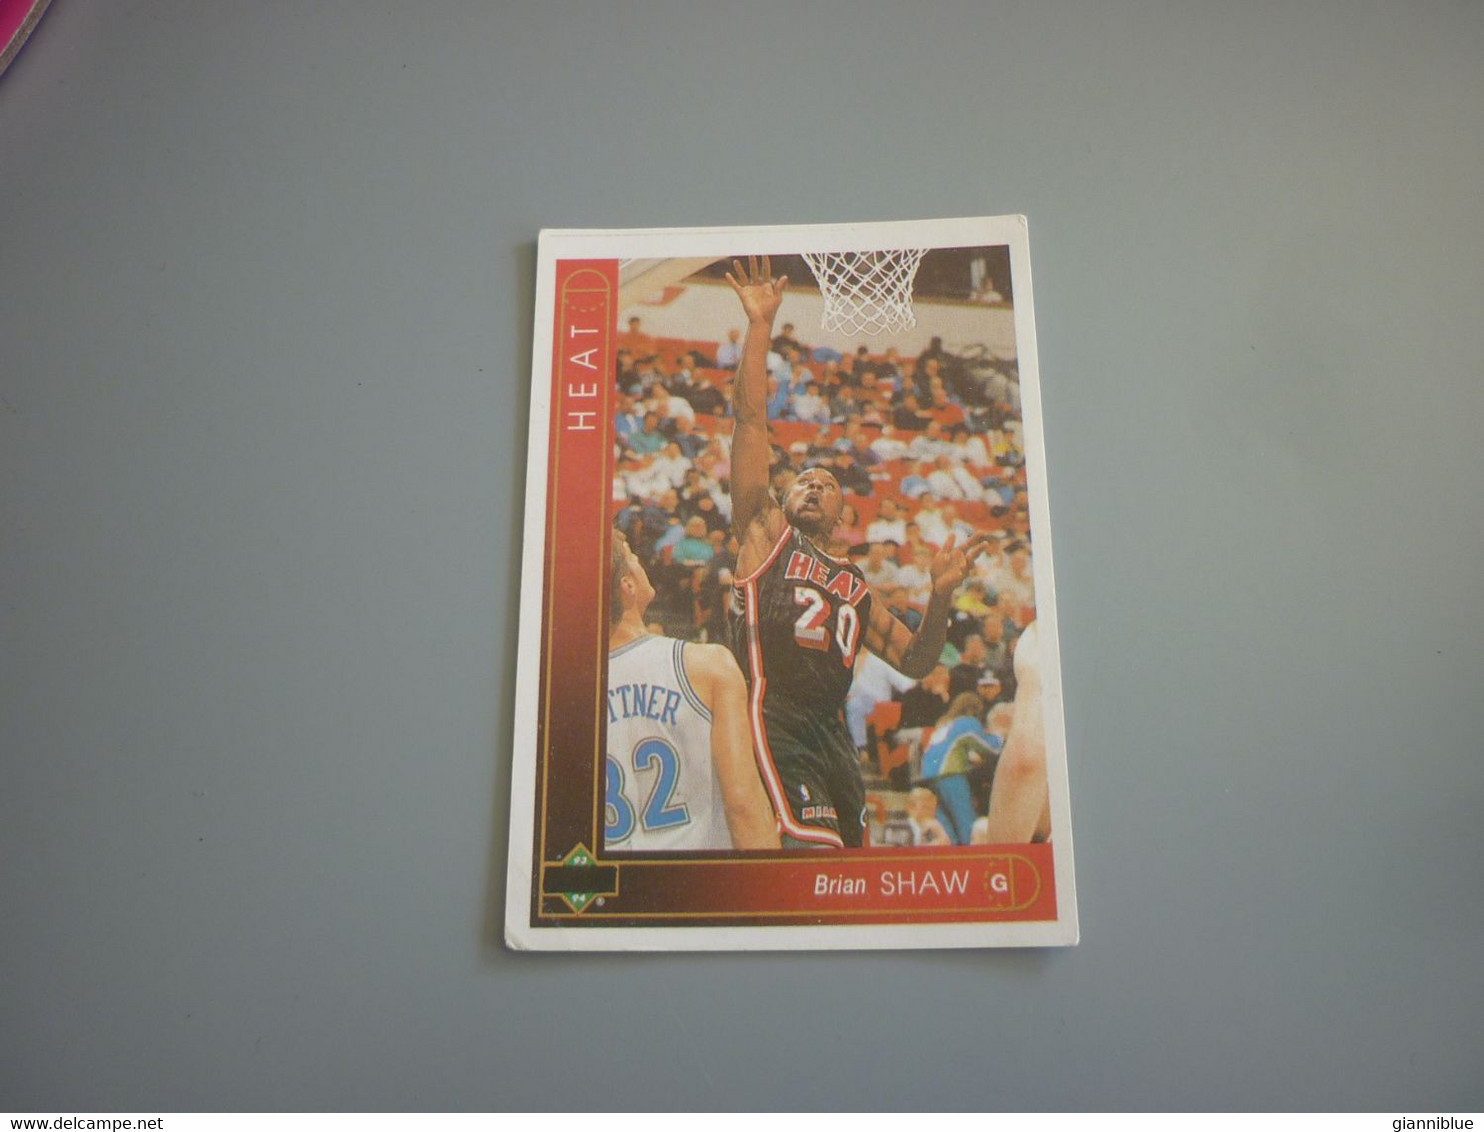 Brian Shaw Miami Heat NBA Basketball '90s Rare Greek Edition Card - 1990-1999